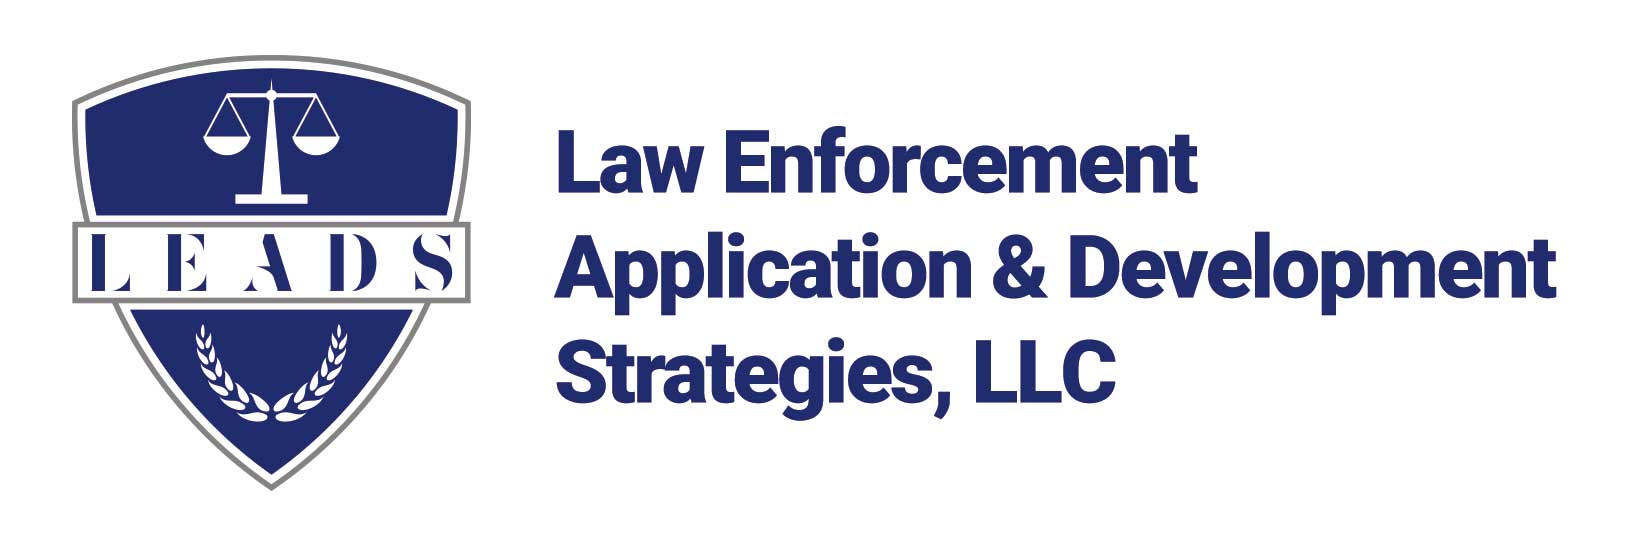 Law Enforcement & Development Strategies, LLC